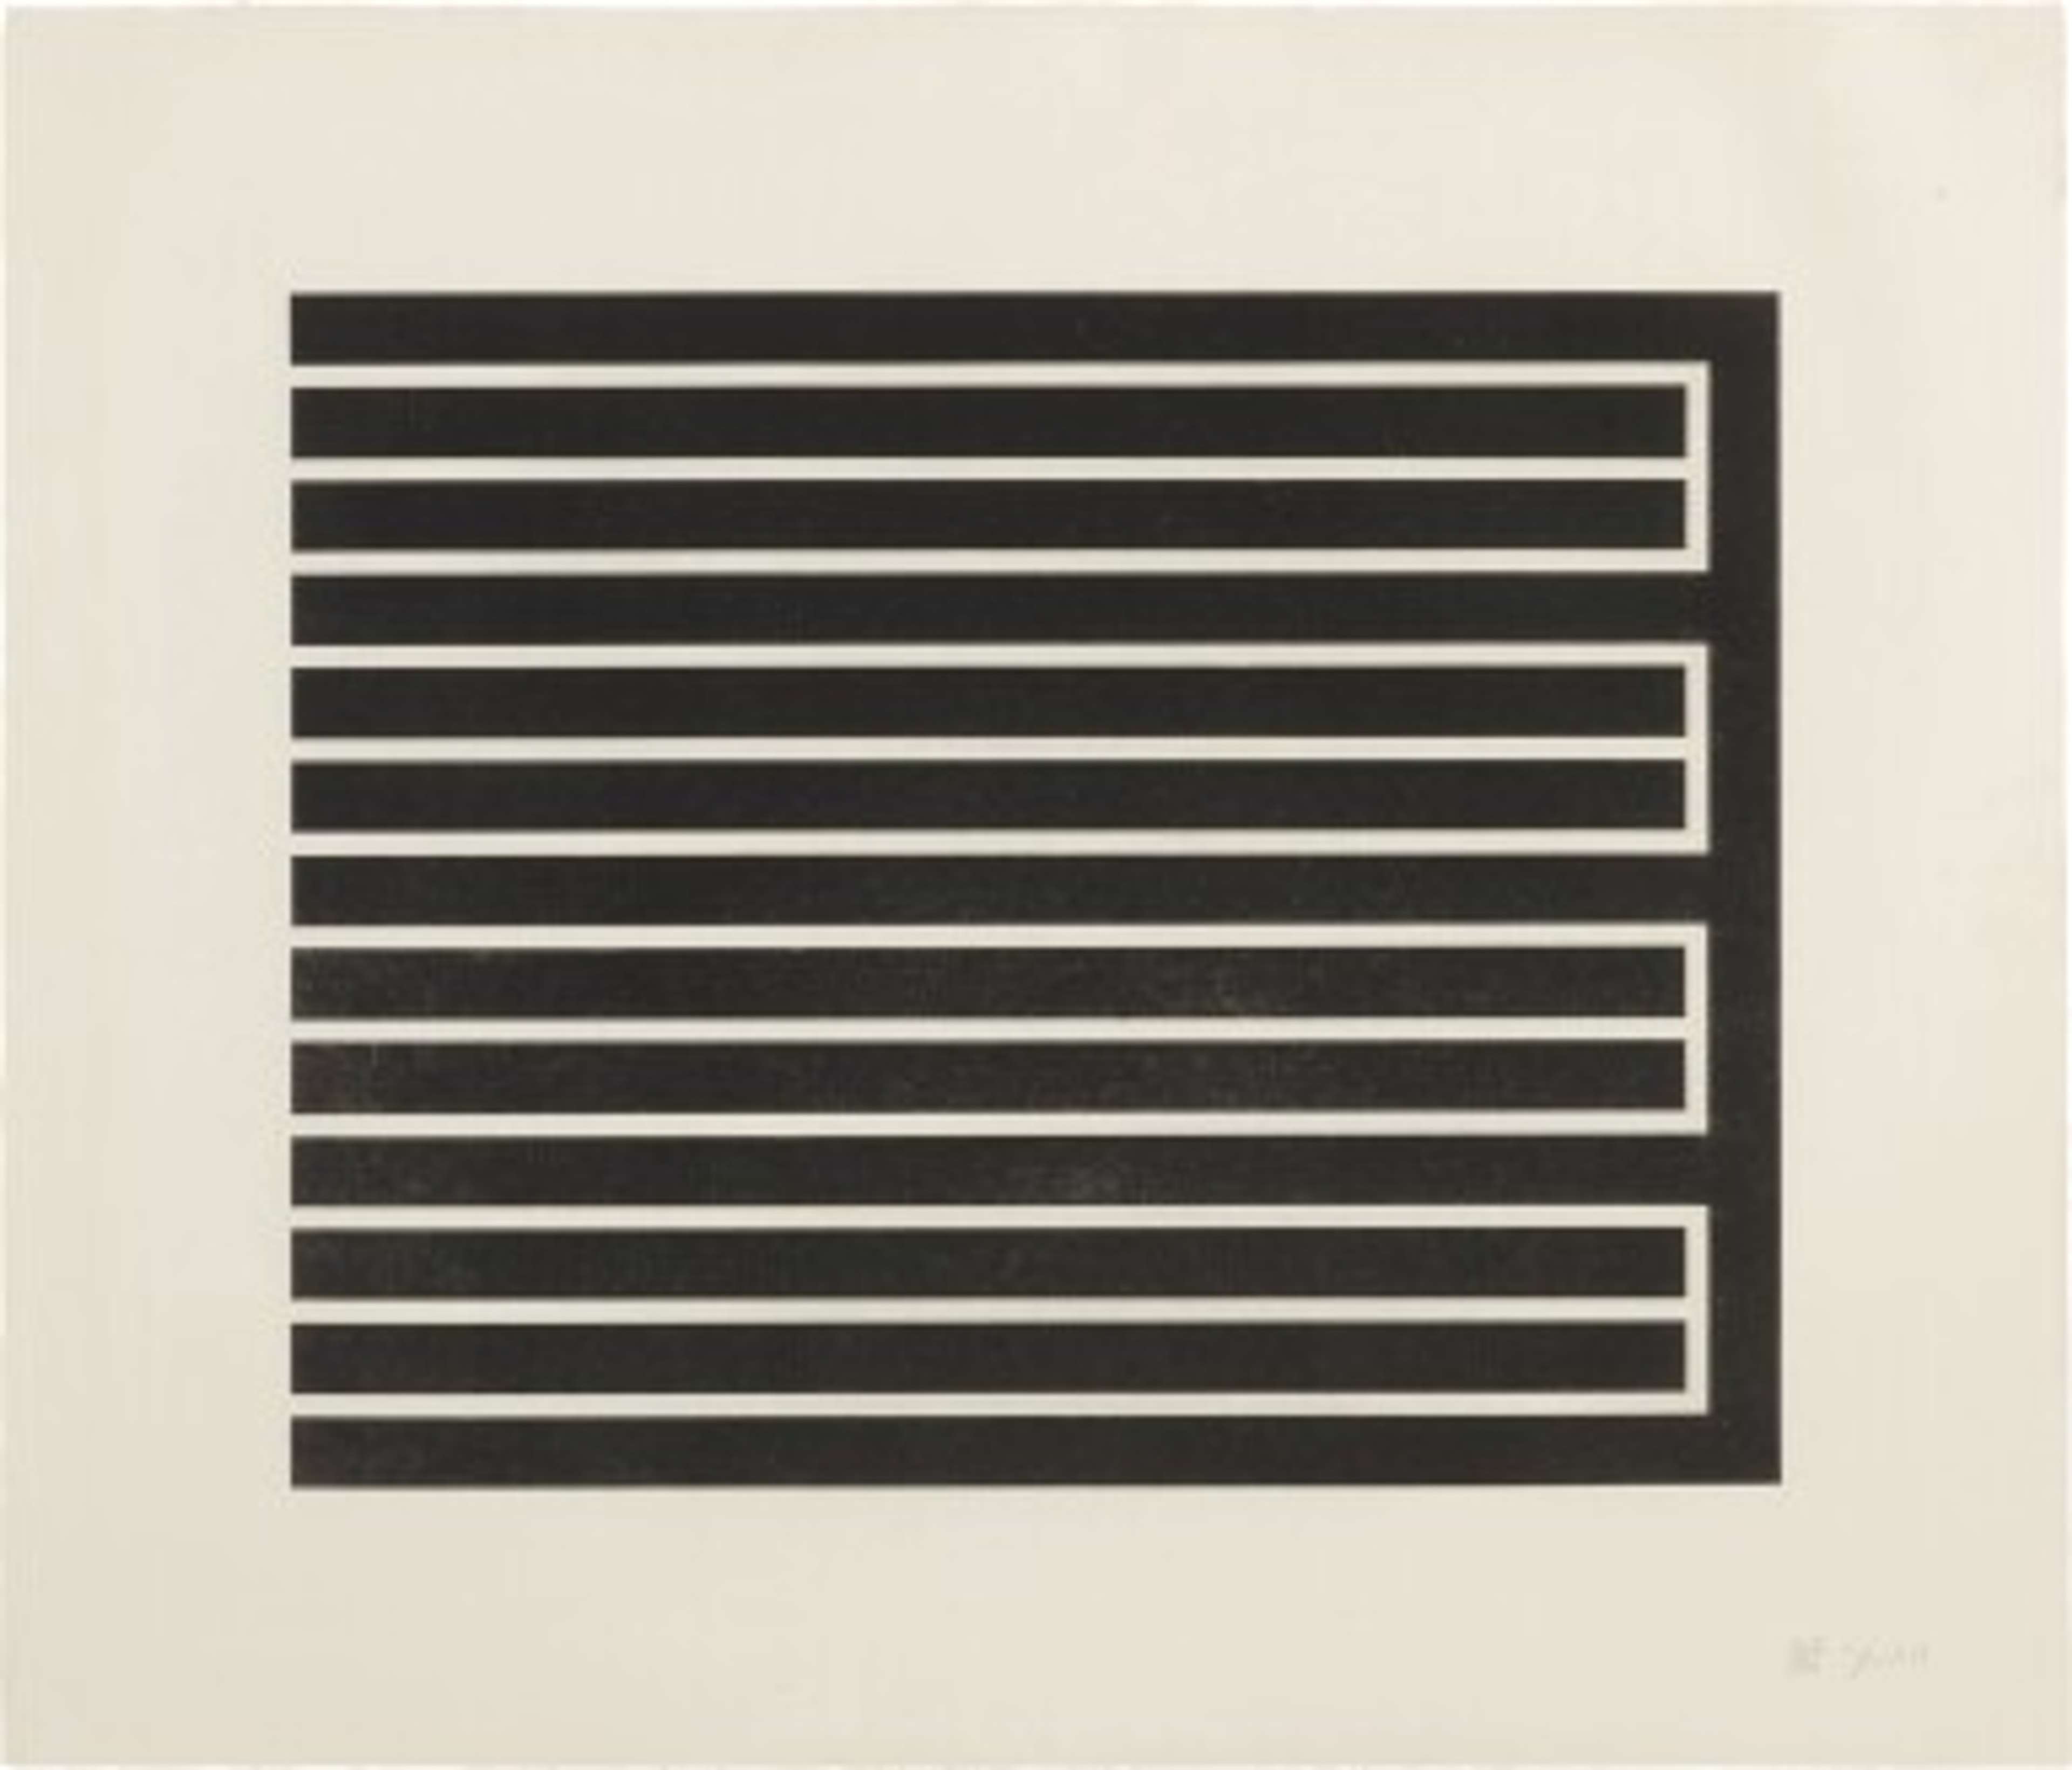 Untitled (S. 123) - Signed Print by Donald Judd 1980 - MyArtBroker